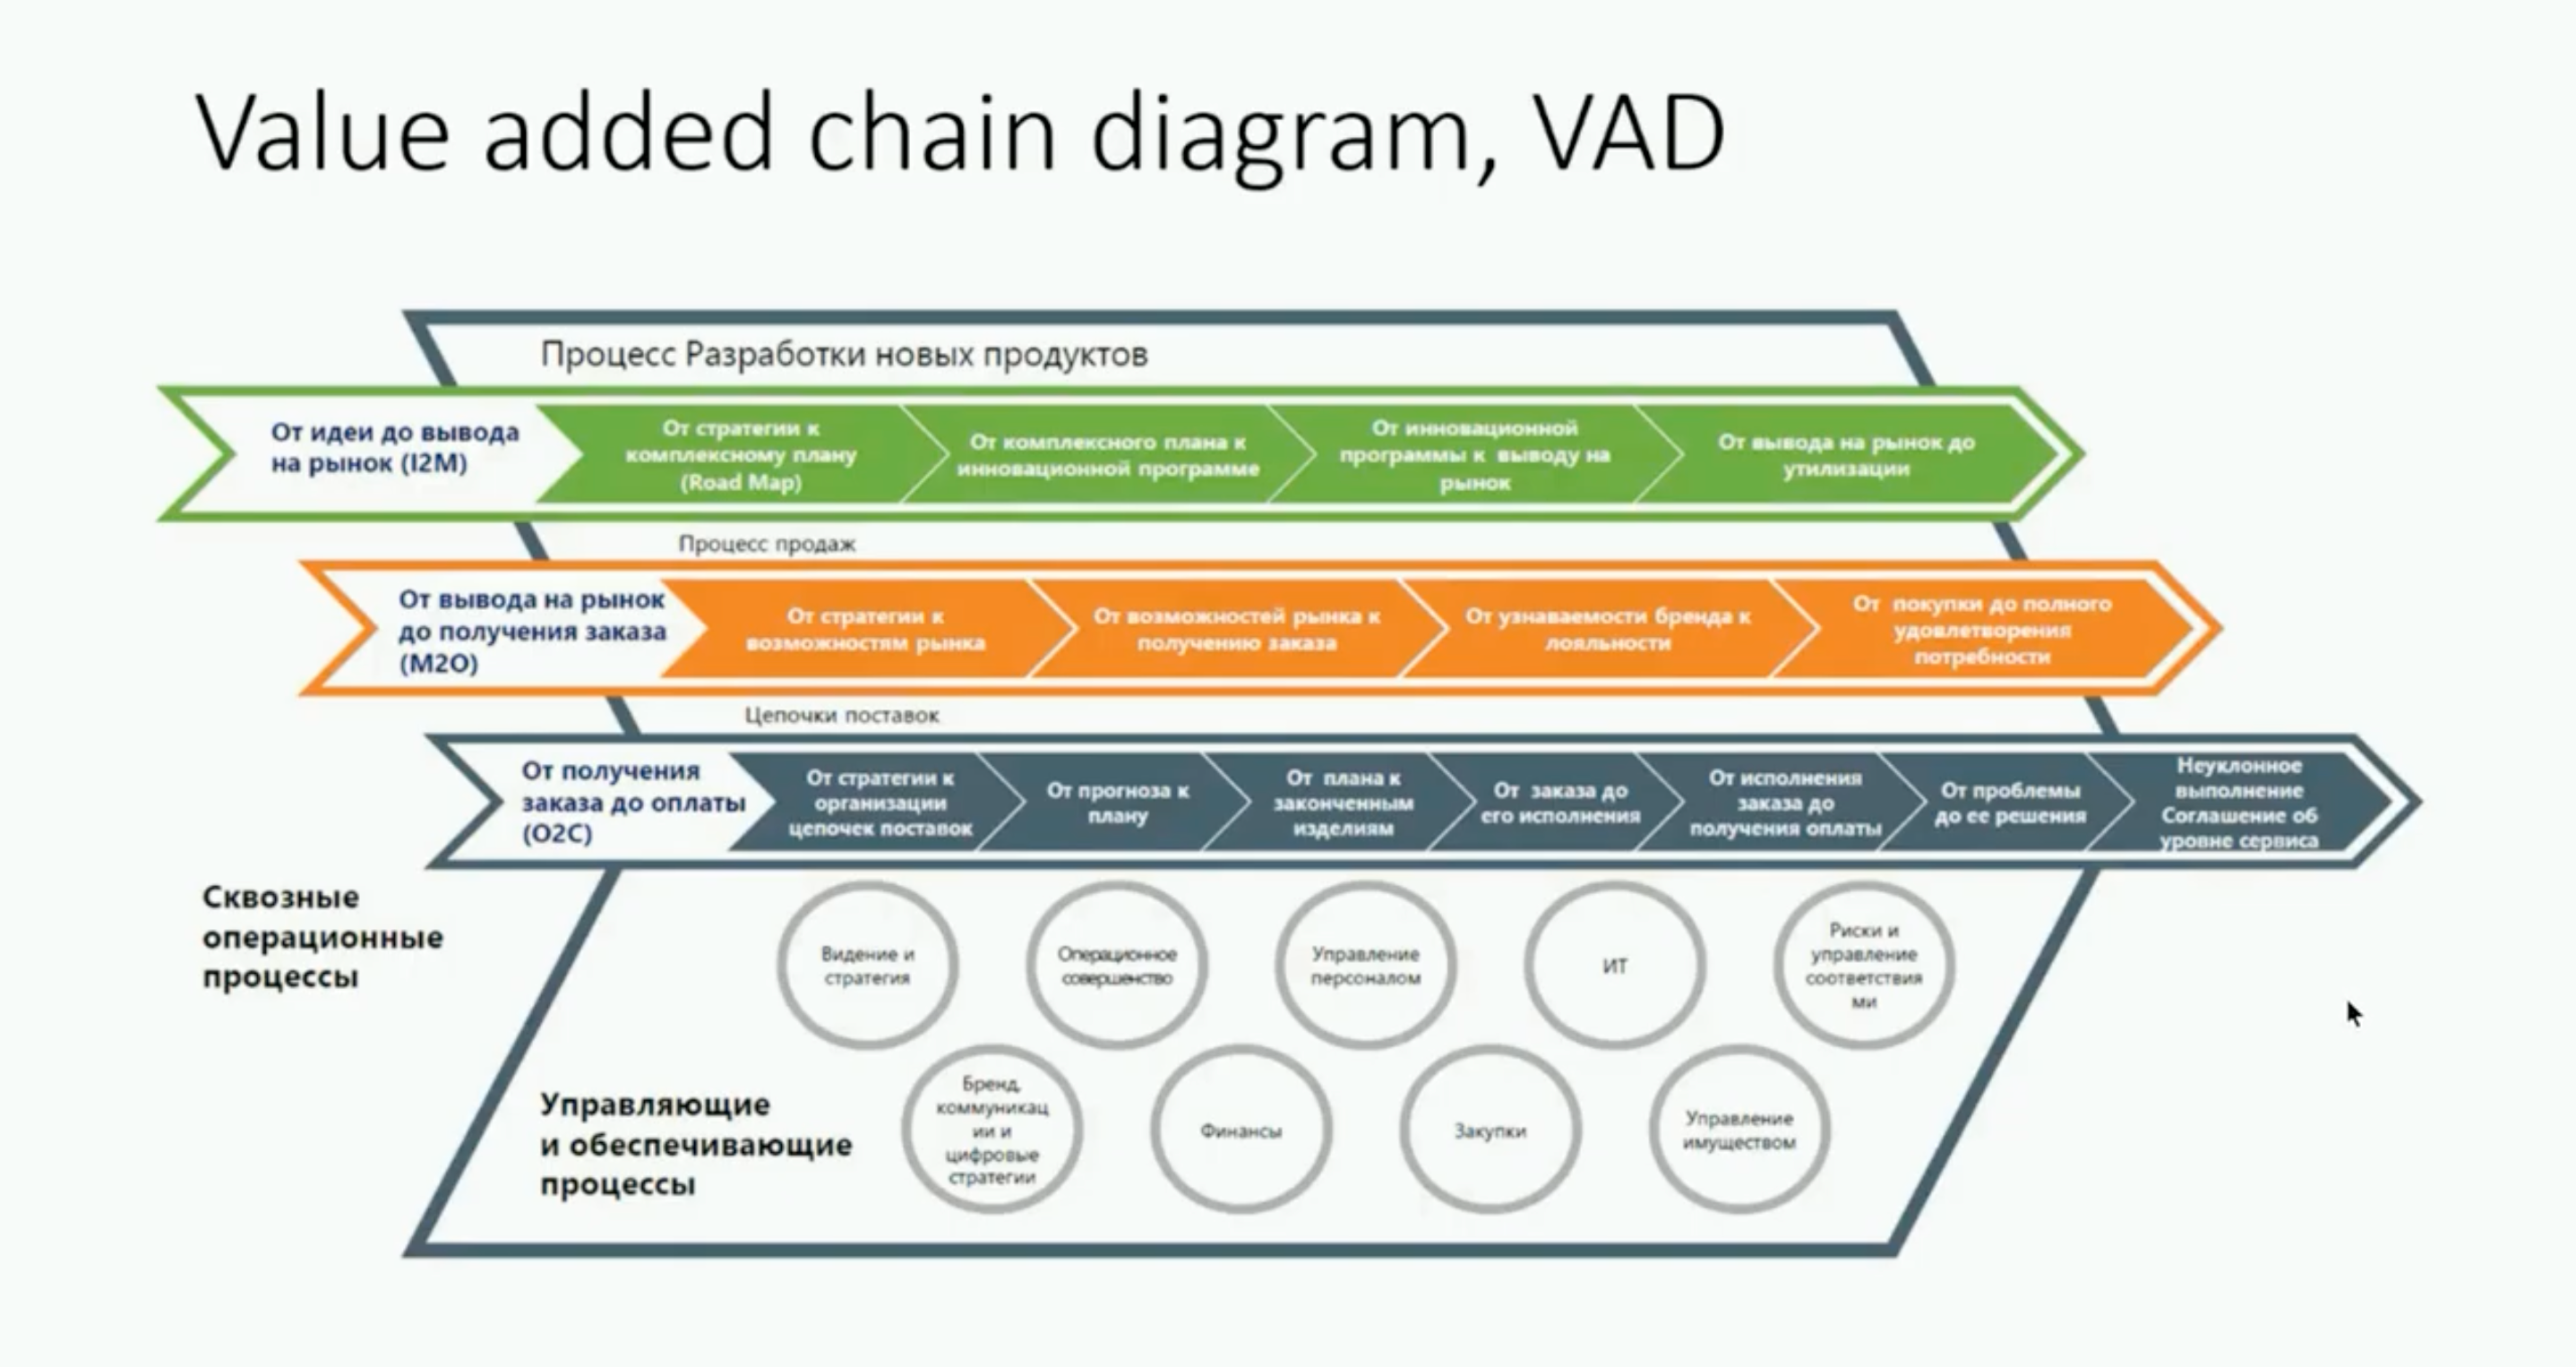 Added chain. Моделирование бизнес-процессов — vad. Value added Chain diagram. EPC моделирование бизнес-процессов. Vad процессы верхнего уровня.